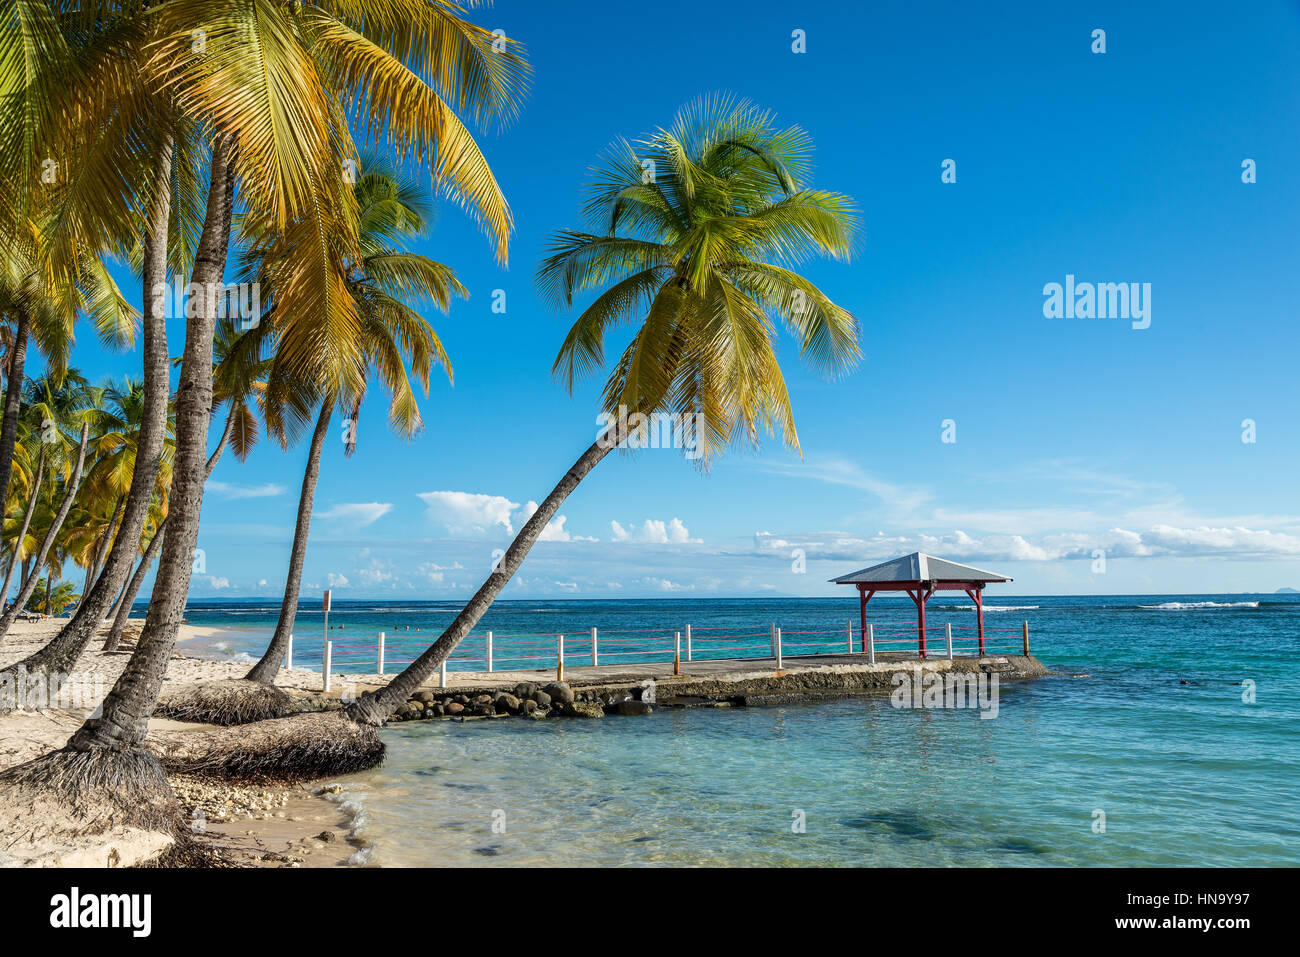 beach of Plage de la Caravelle in Guadeloupe Stock Photo